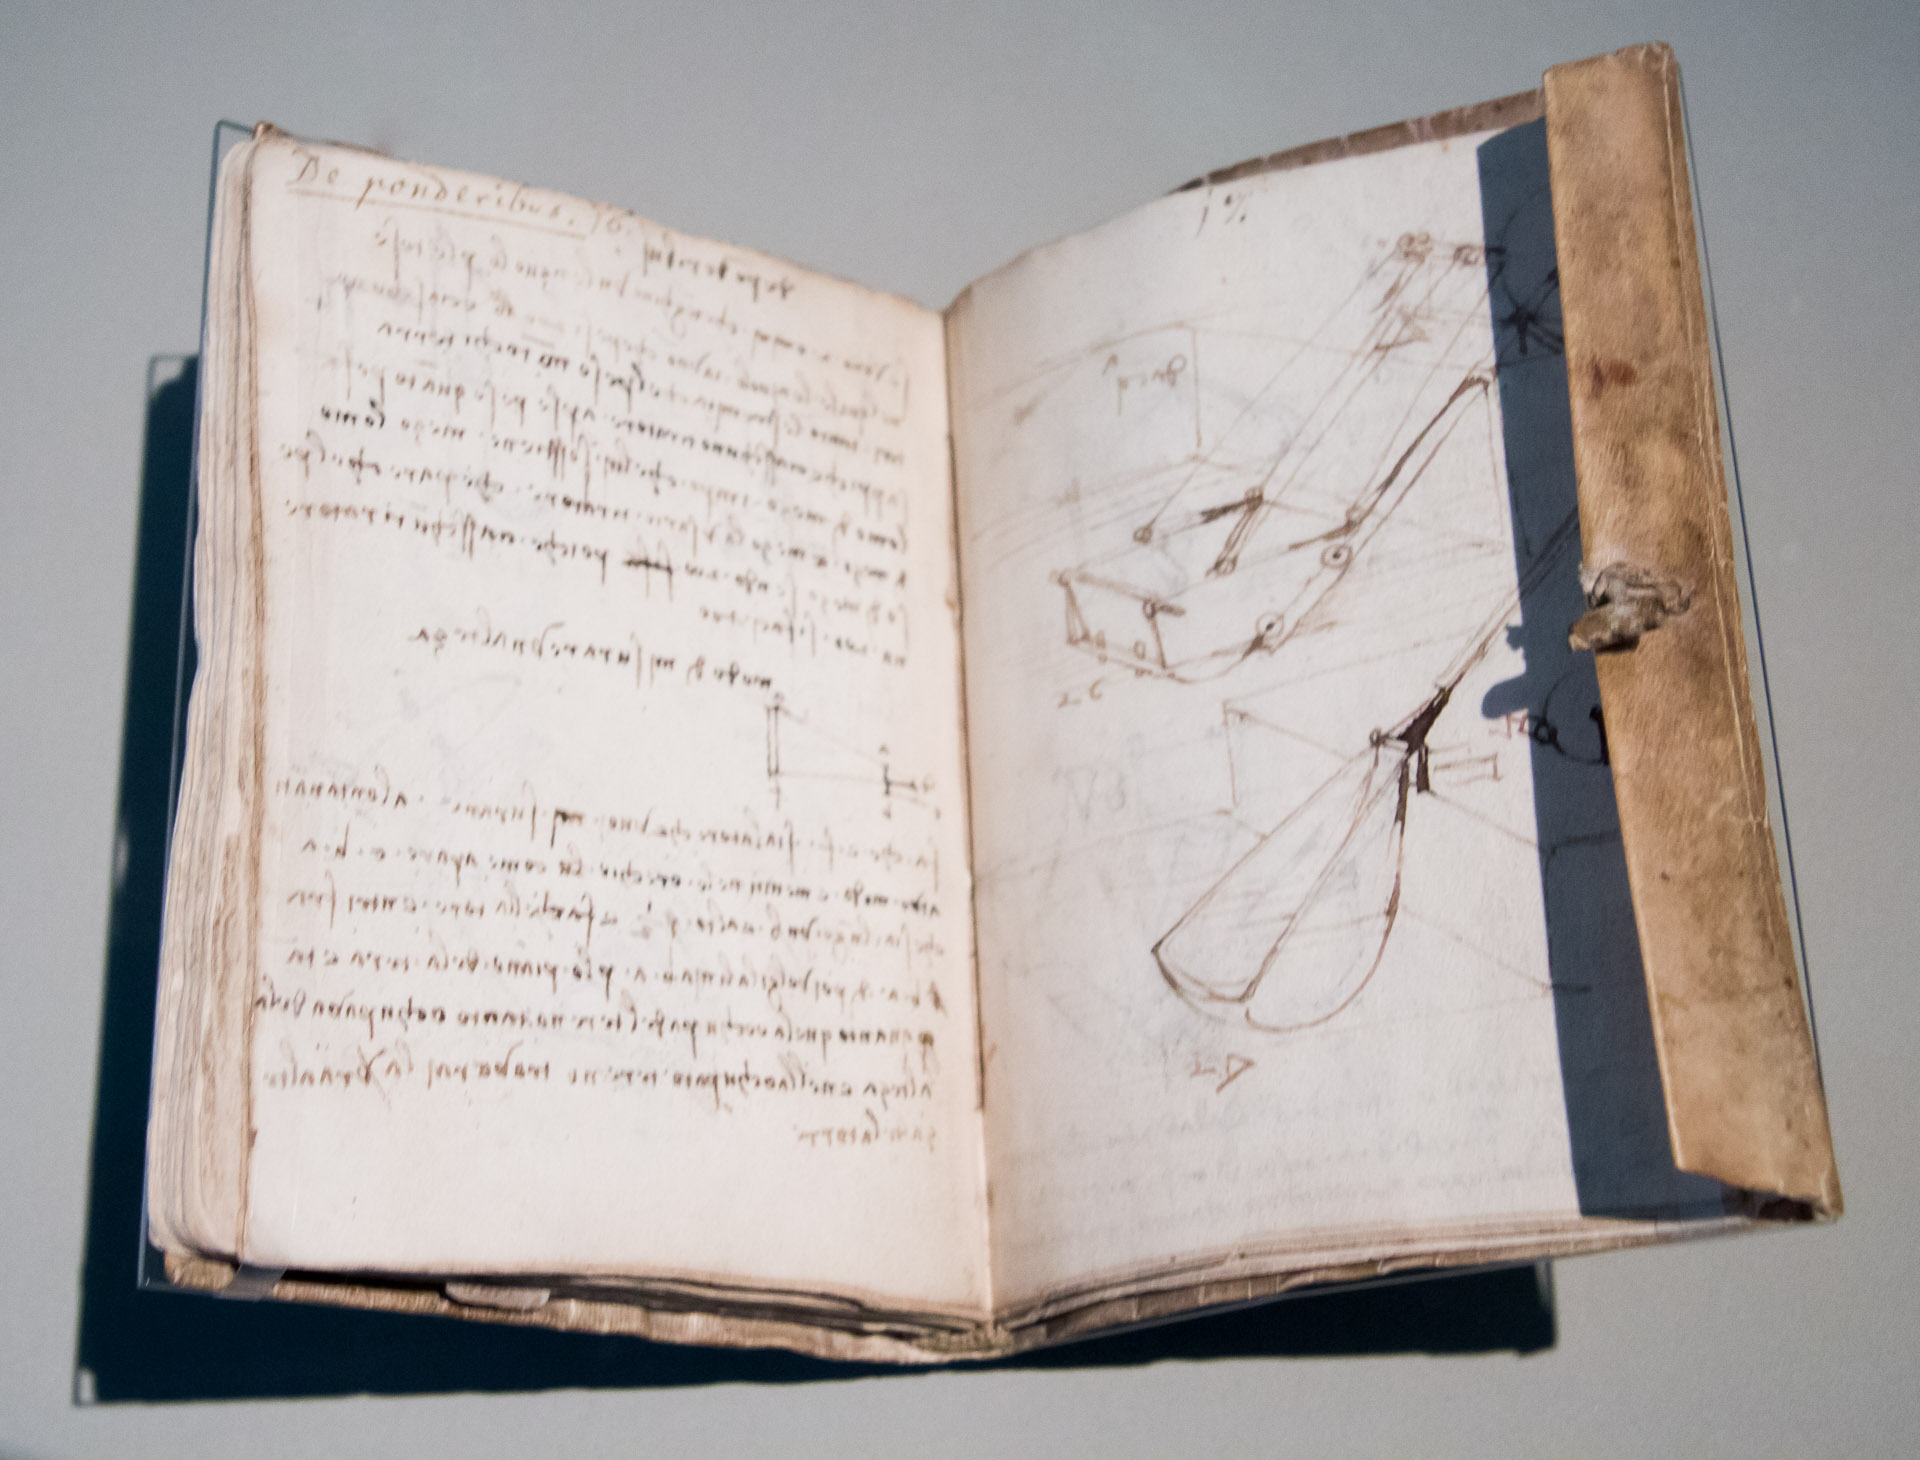 Da Vinci notebook at the Victoria and Albert Museum in London